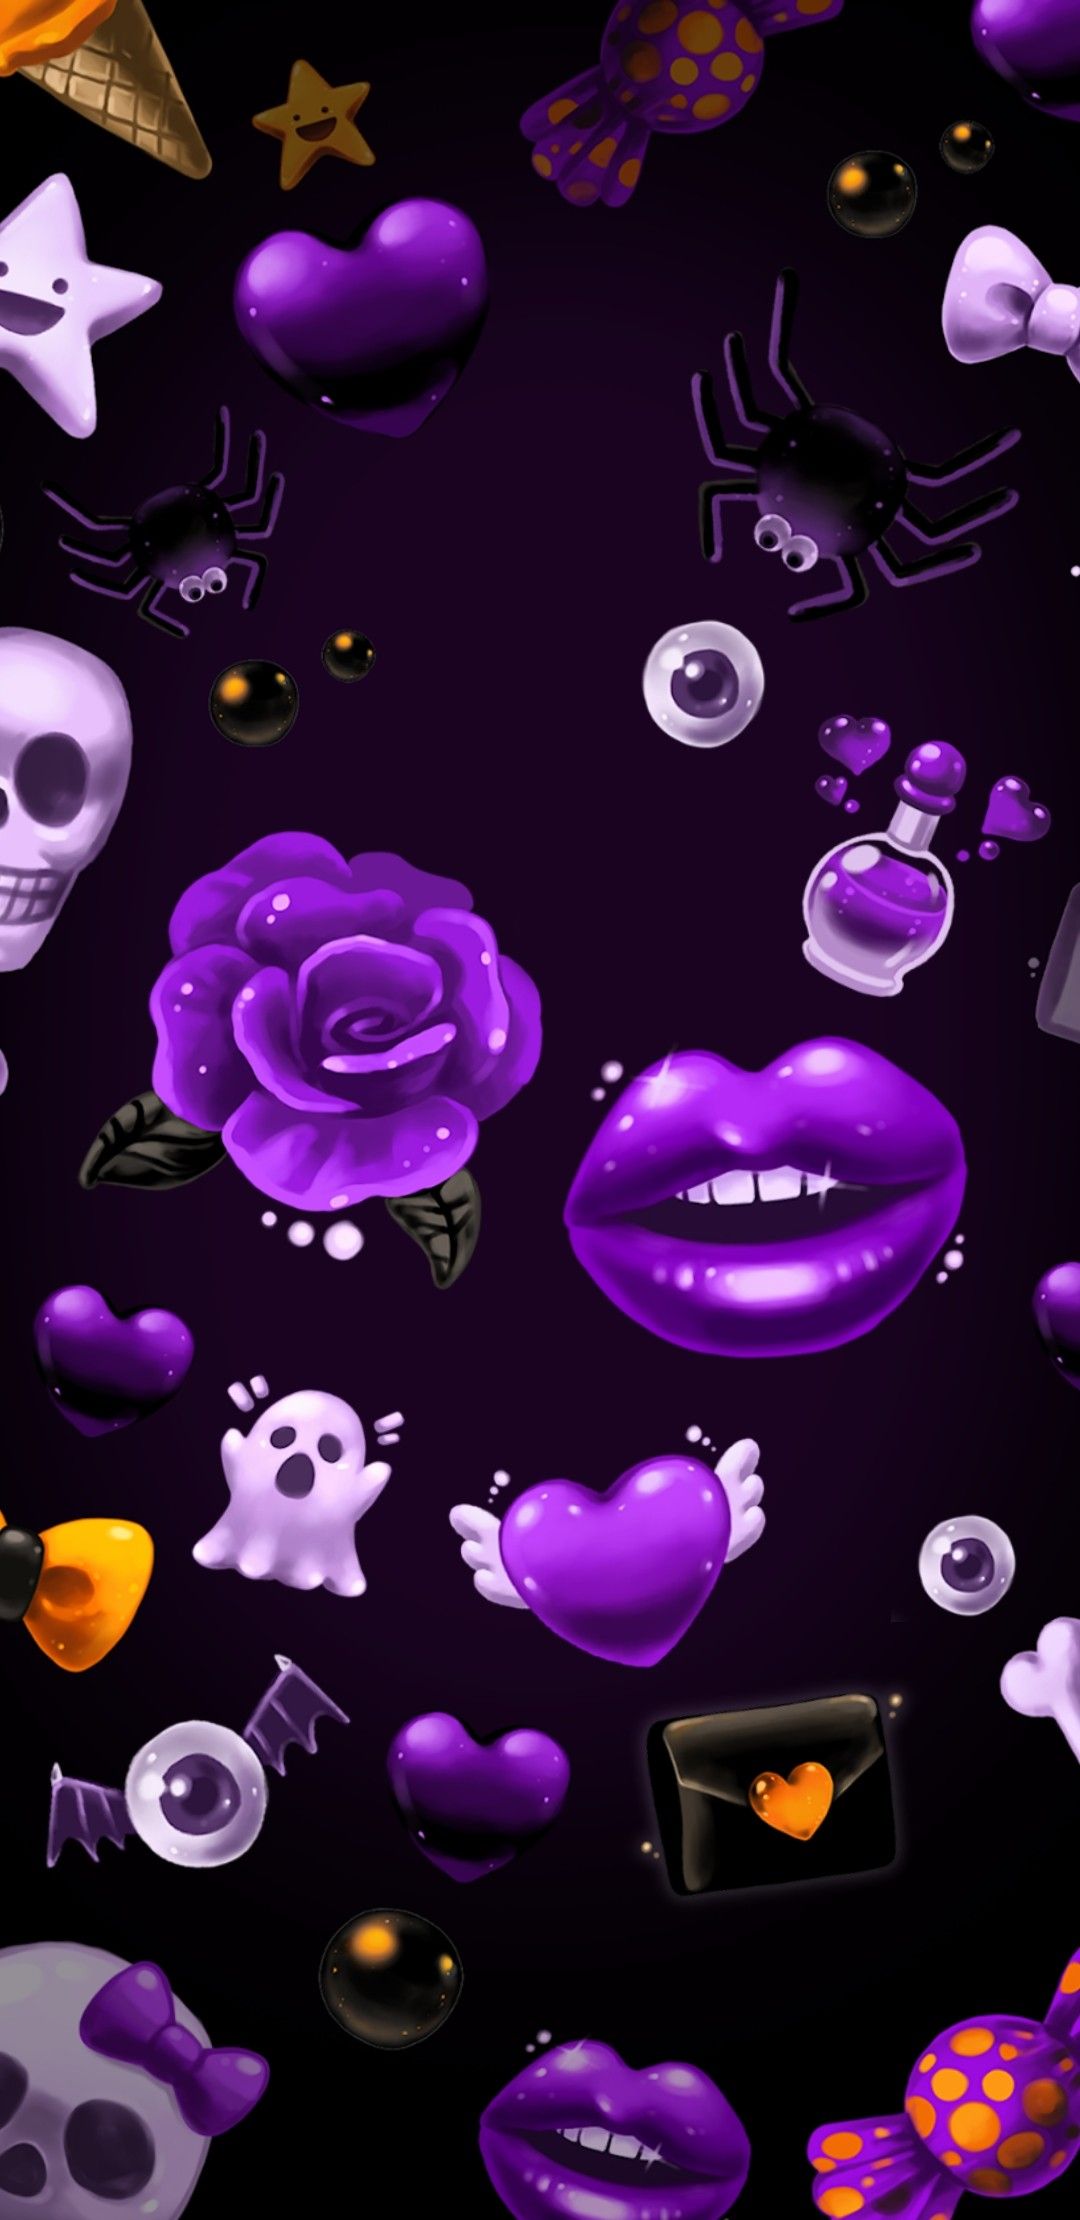 25 Pumpkin Wallpaper Ideas  JackOLantern on Midnight Purple Background   Idea Wallpapers  iPhone WallpapersColor Schemes